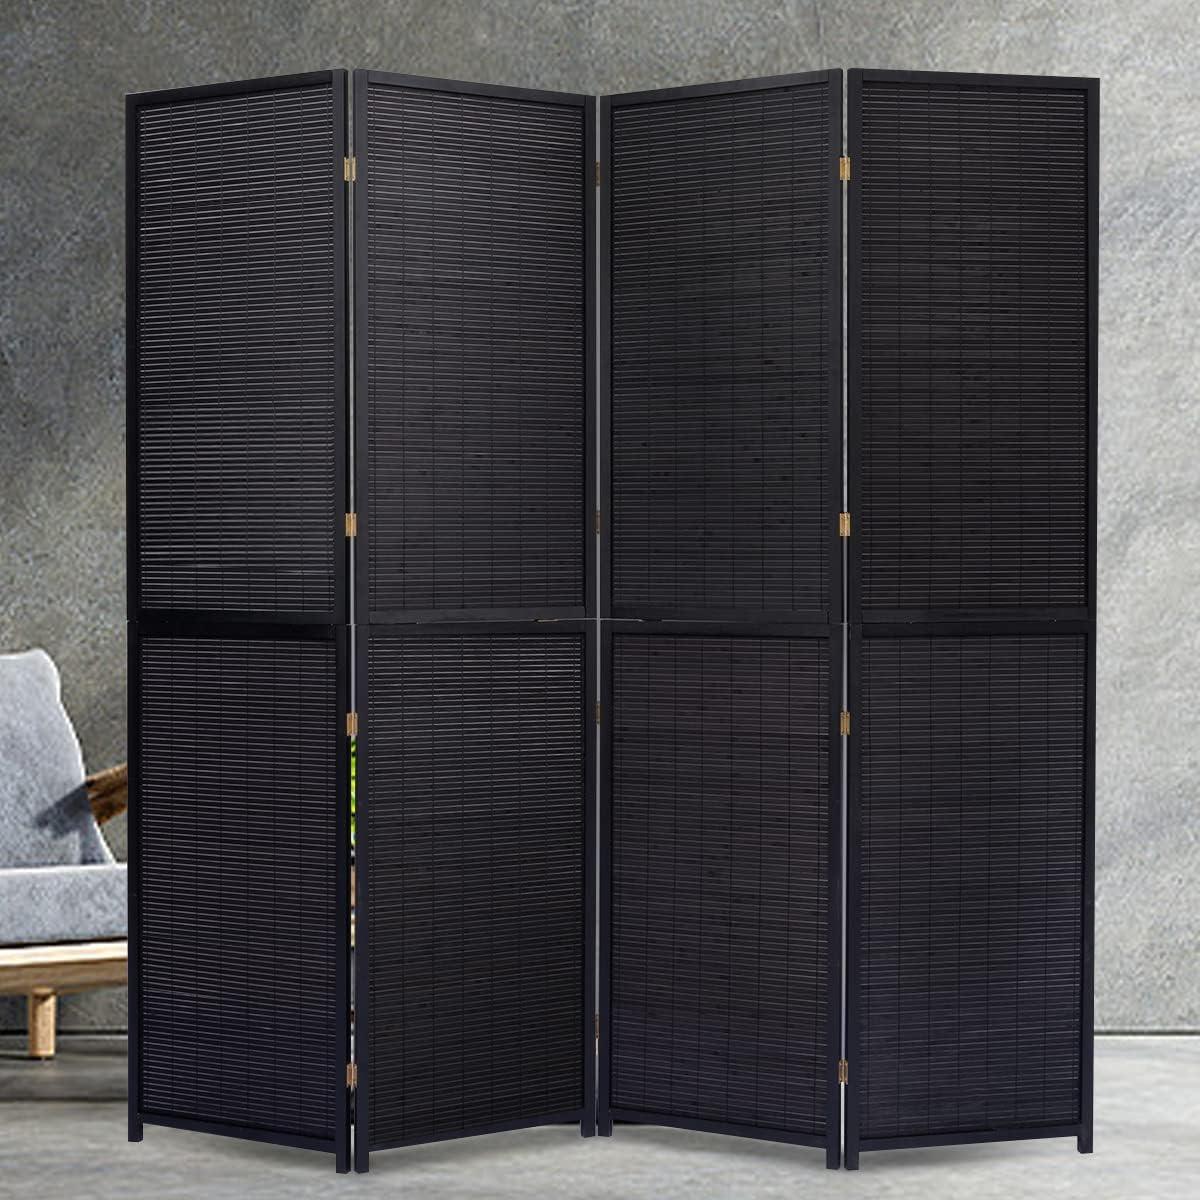 4 Panel Bamboo Room Divider, Folding Privacy Screen, Bamboo Mesh Woven Design, Black, Retail $100.00